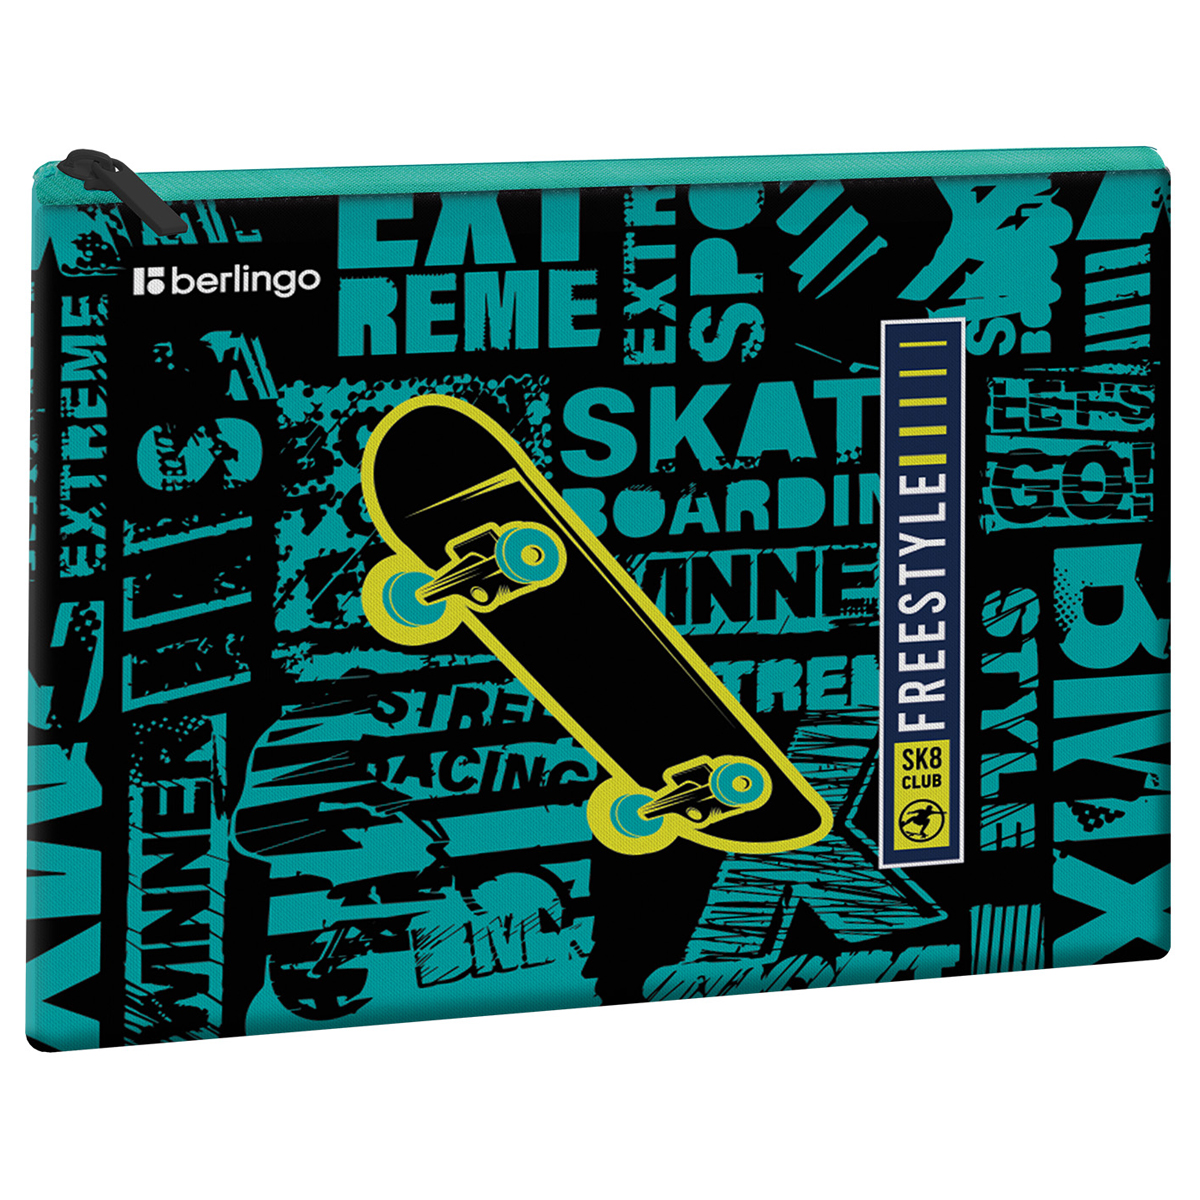  1 , 5 Berlingo "Skateboarding", 25 